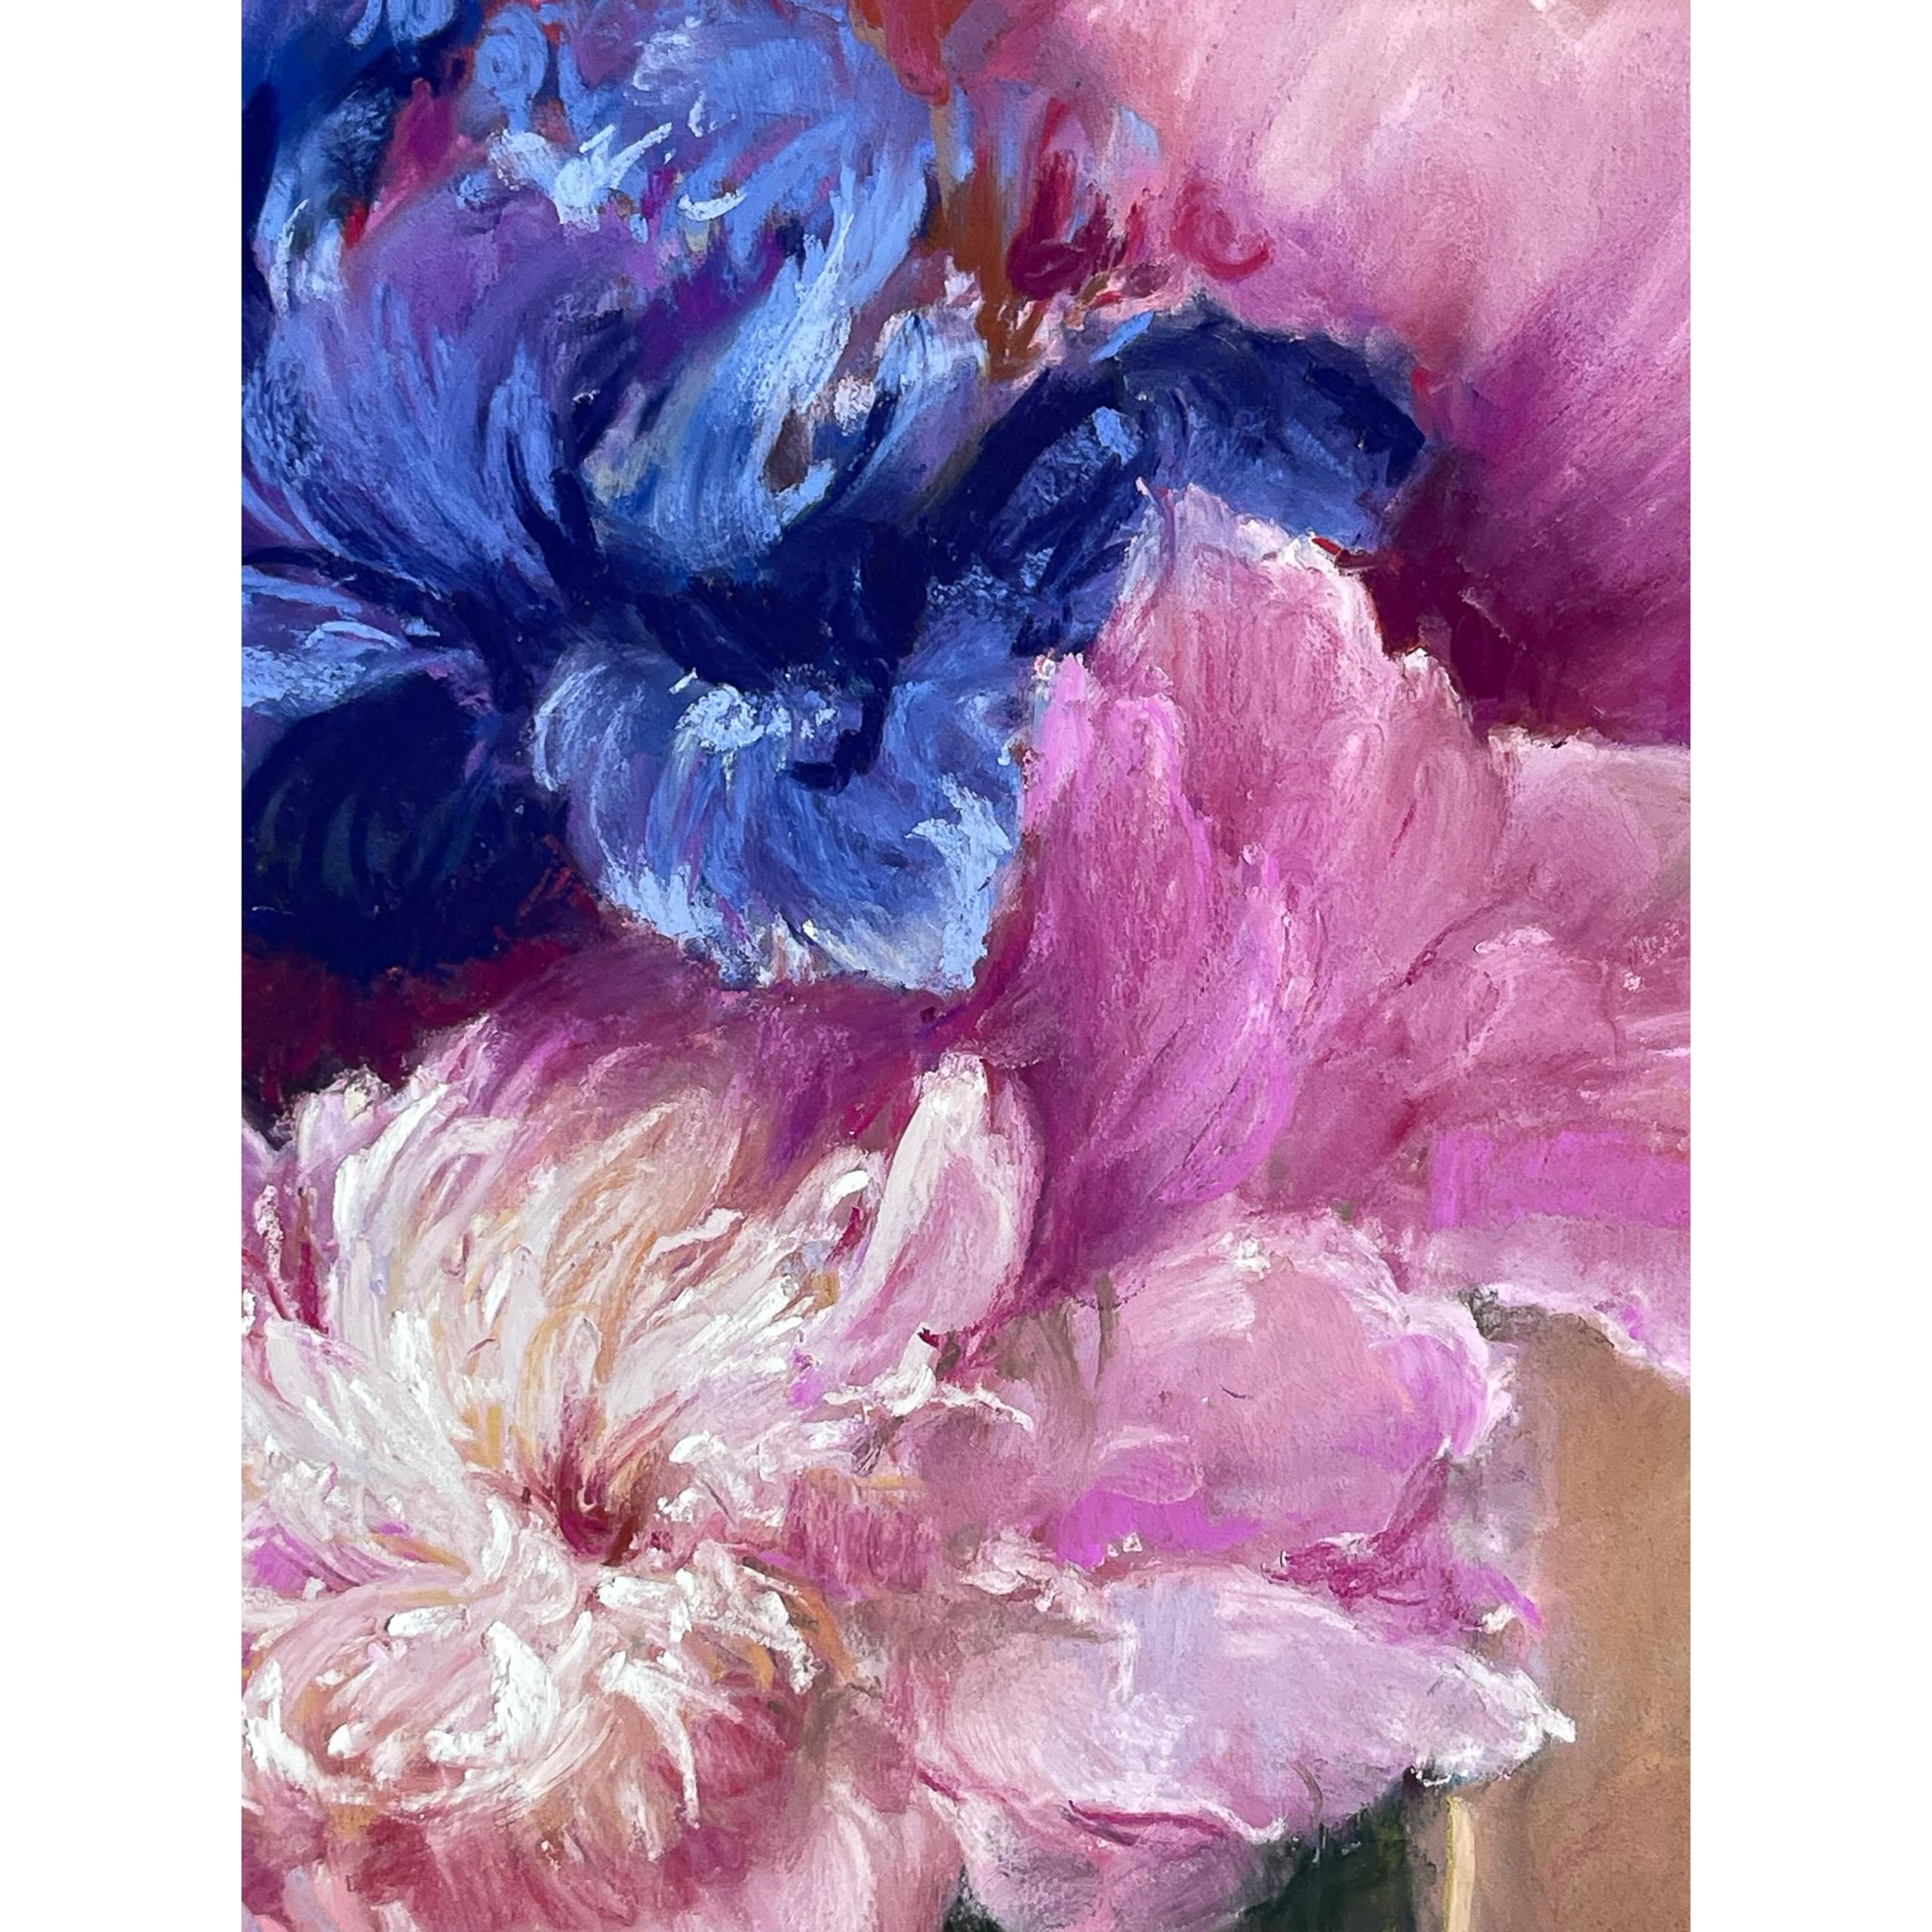 Julia Lambright

Spring Cut

Soft pastel on pastelmat

Image size: 17” x 12.5”

Framed size: 19” x 14.5”

2023
